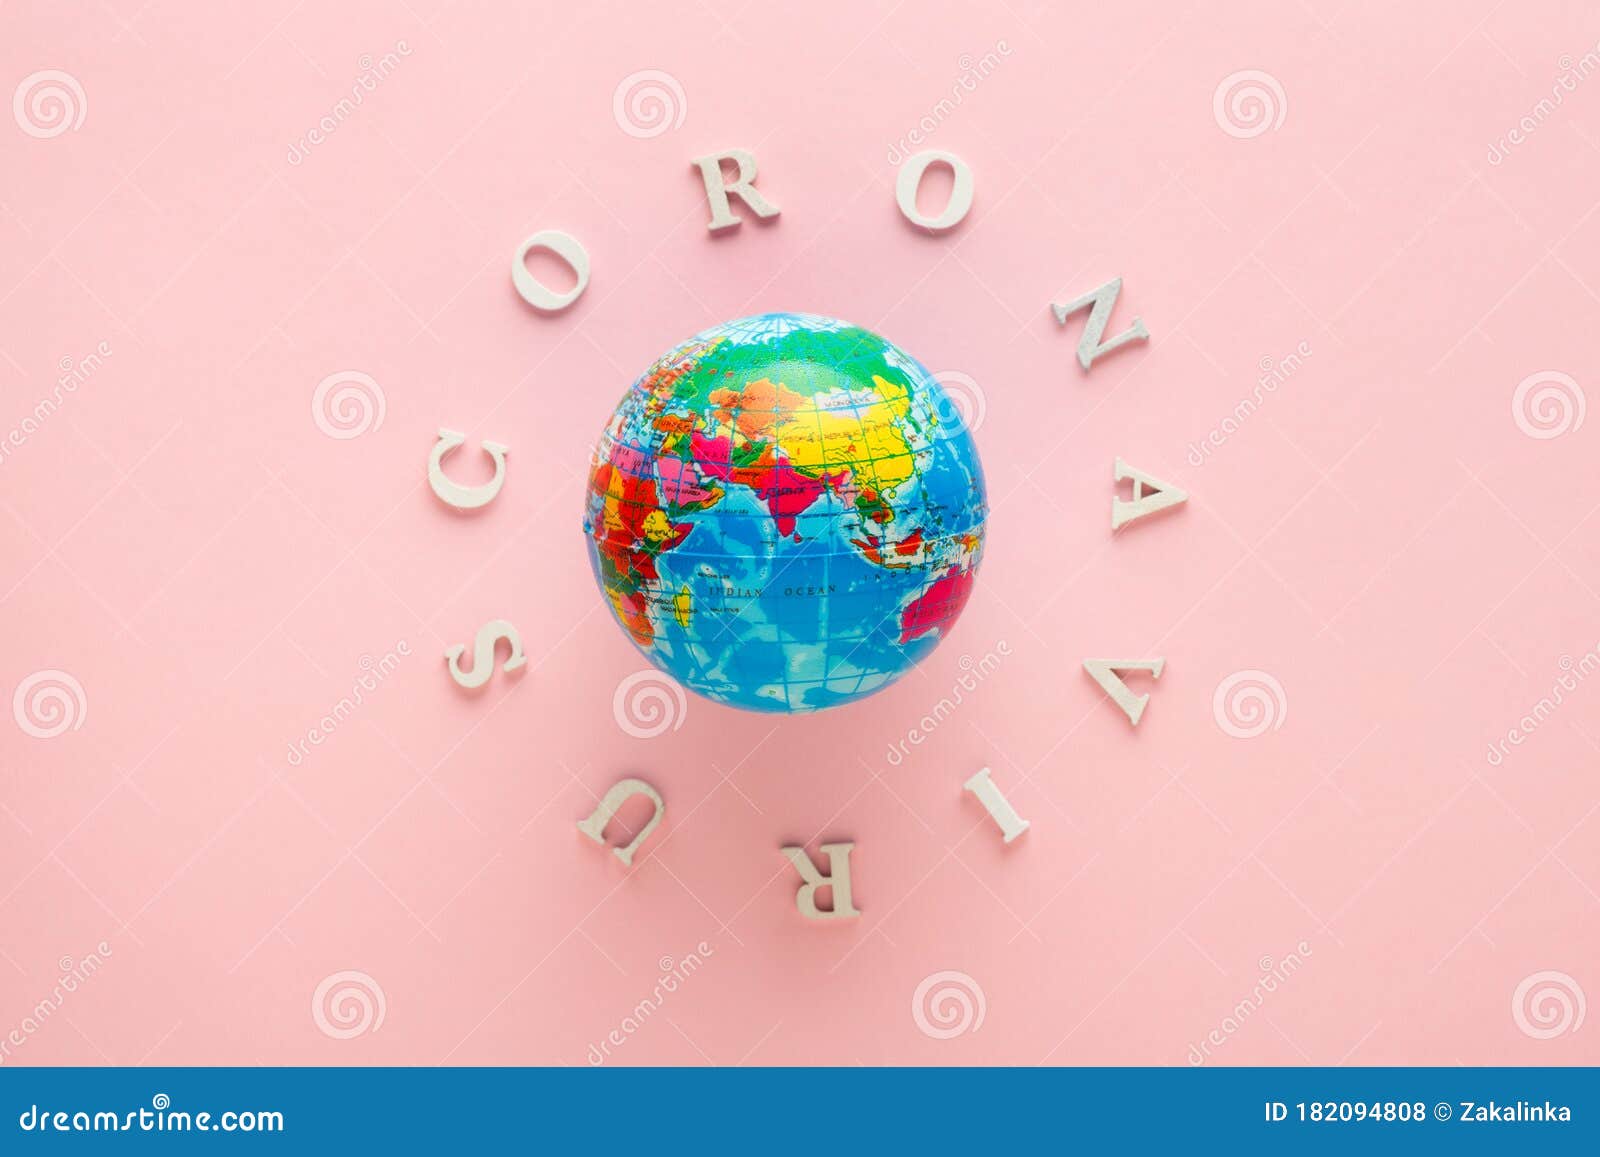 coronavirus flu ncov and earth gloe  on pink background